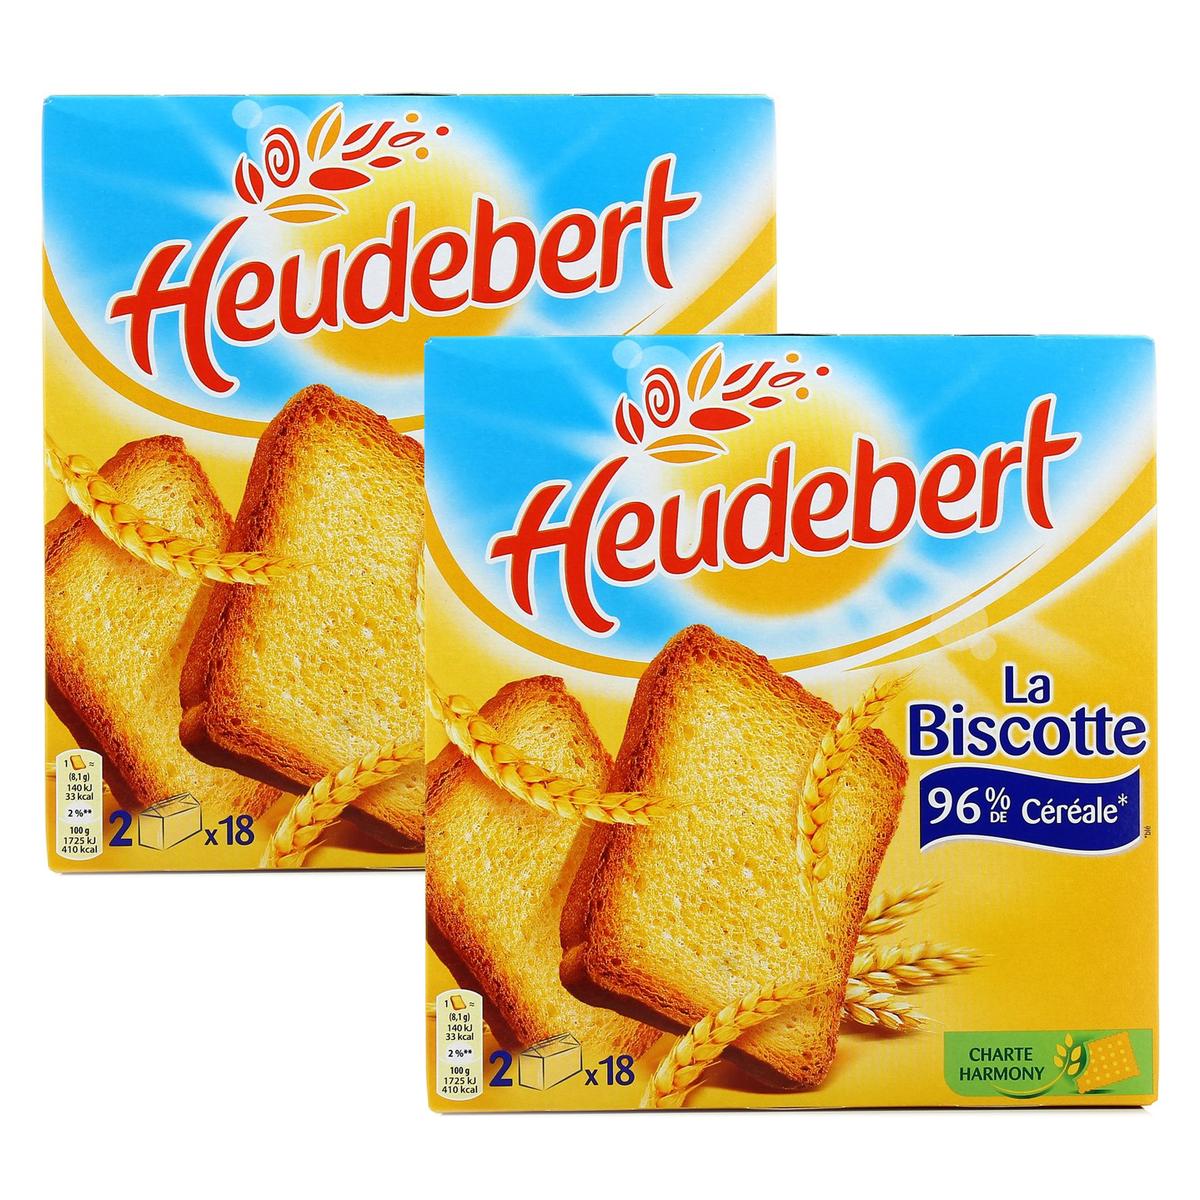 Biscottes Heudebert : note Nutri-Score D